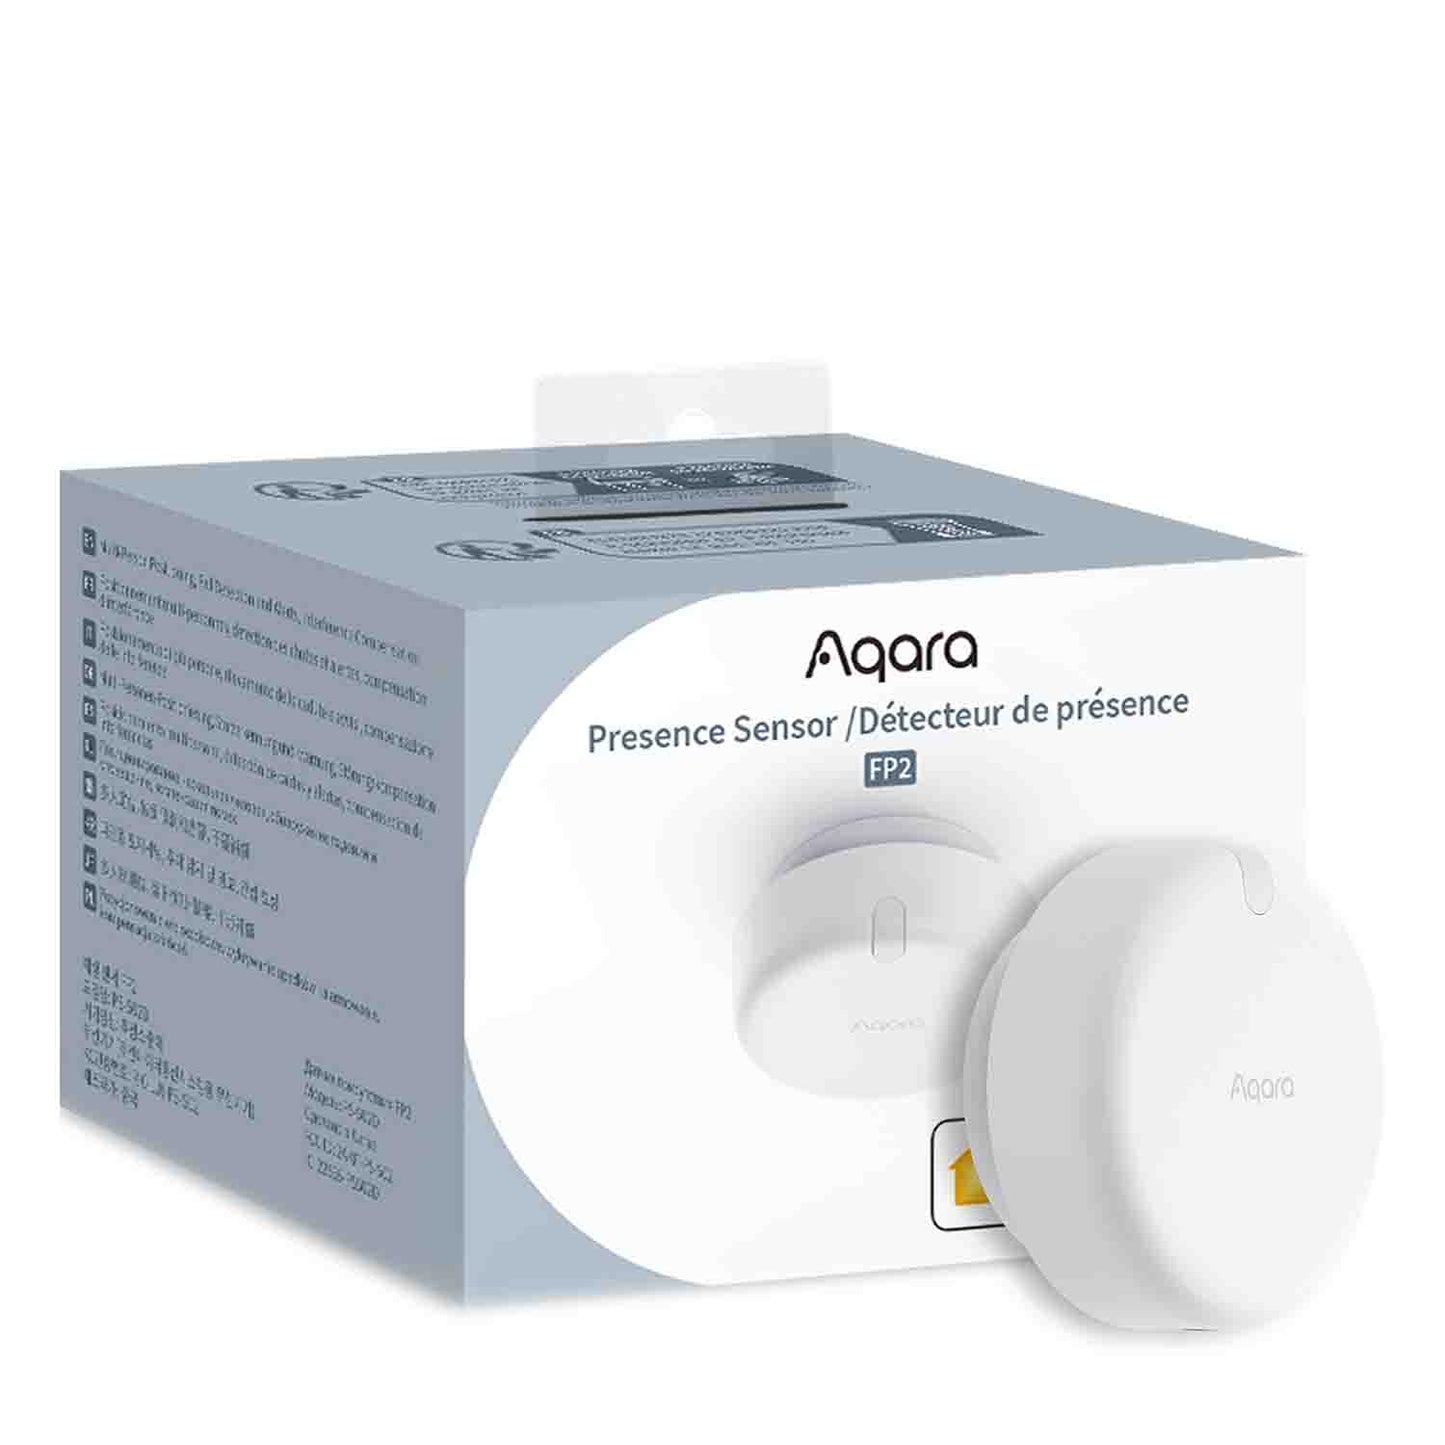 Aqara Presence Sensor FP2 Price Singapore